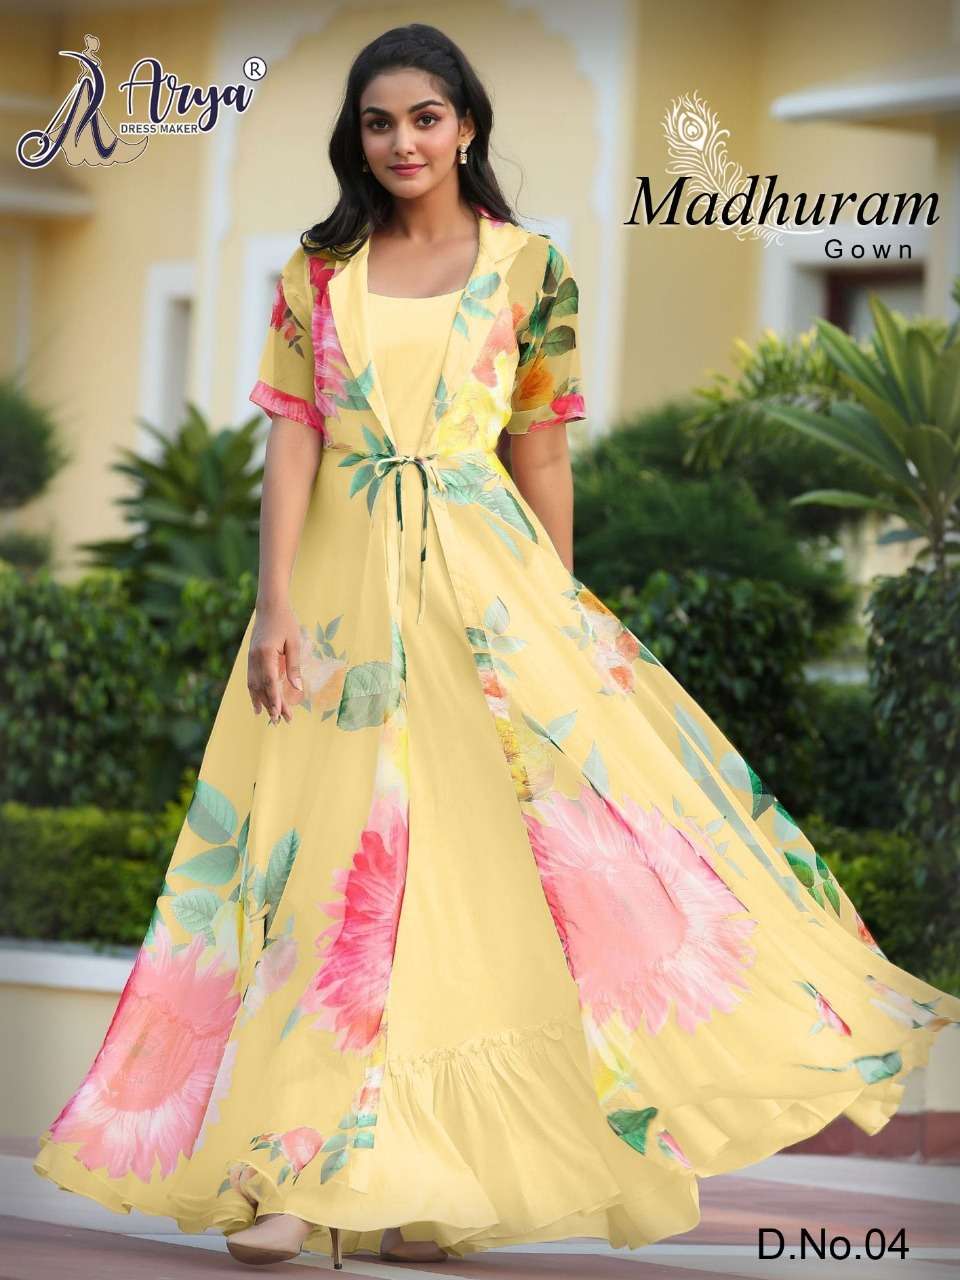 1686656311508575231 Madhuram Gown Arya Dress Maker alisawhoesale 04 3 2022 08 16 12 19 19